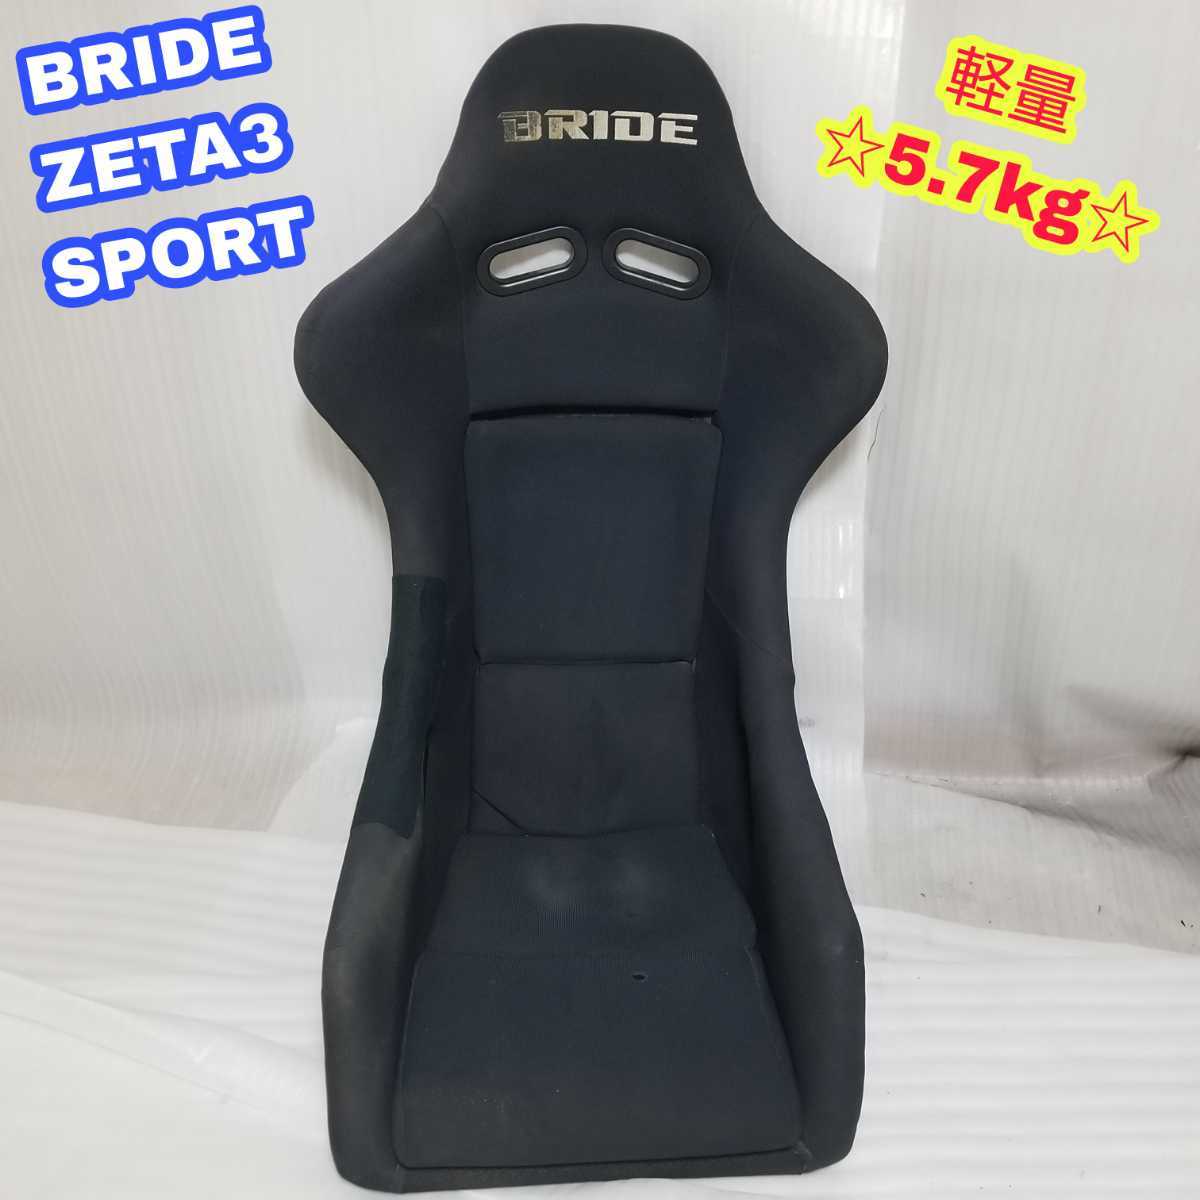 [ prompt decision free shipping ]① BRIDE ZETAⅢ SPORT light weight 5.7kg bride Gita 3 sport full backet full bucket seat immediate payment 